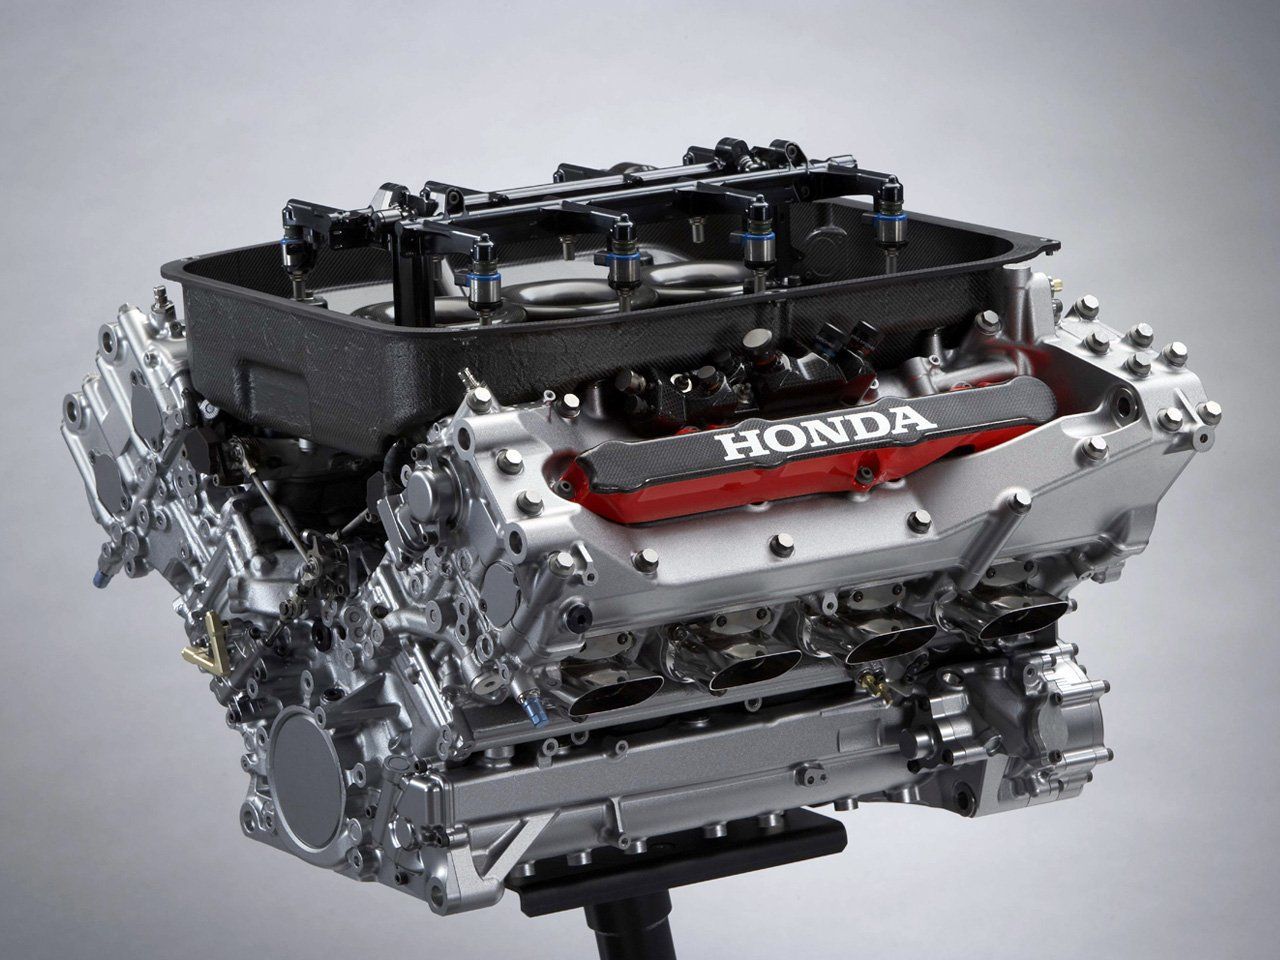 Honda v мотор. Двигатель Honda f1 ra620h. Мотор Honda 8. Мотор Honda 6. Мотор Хонда v12.